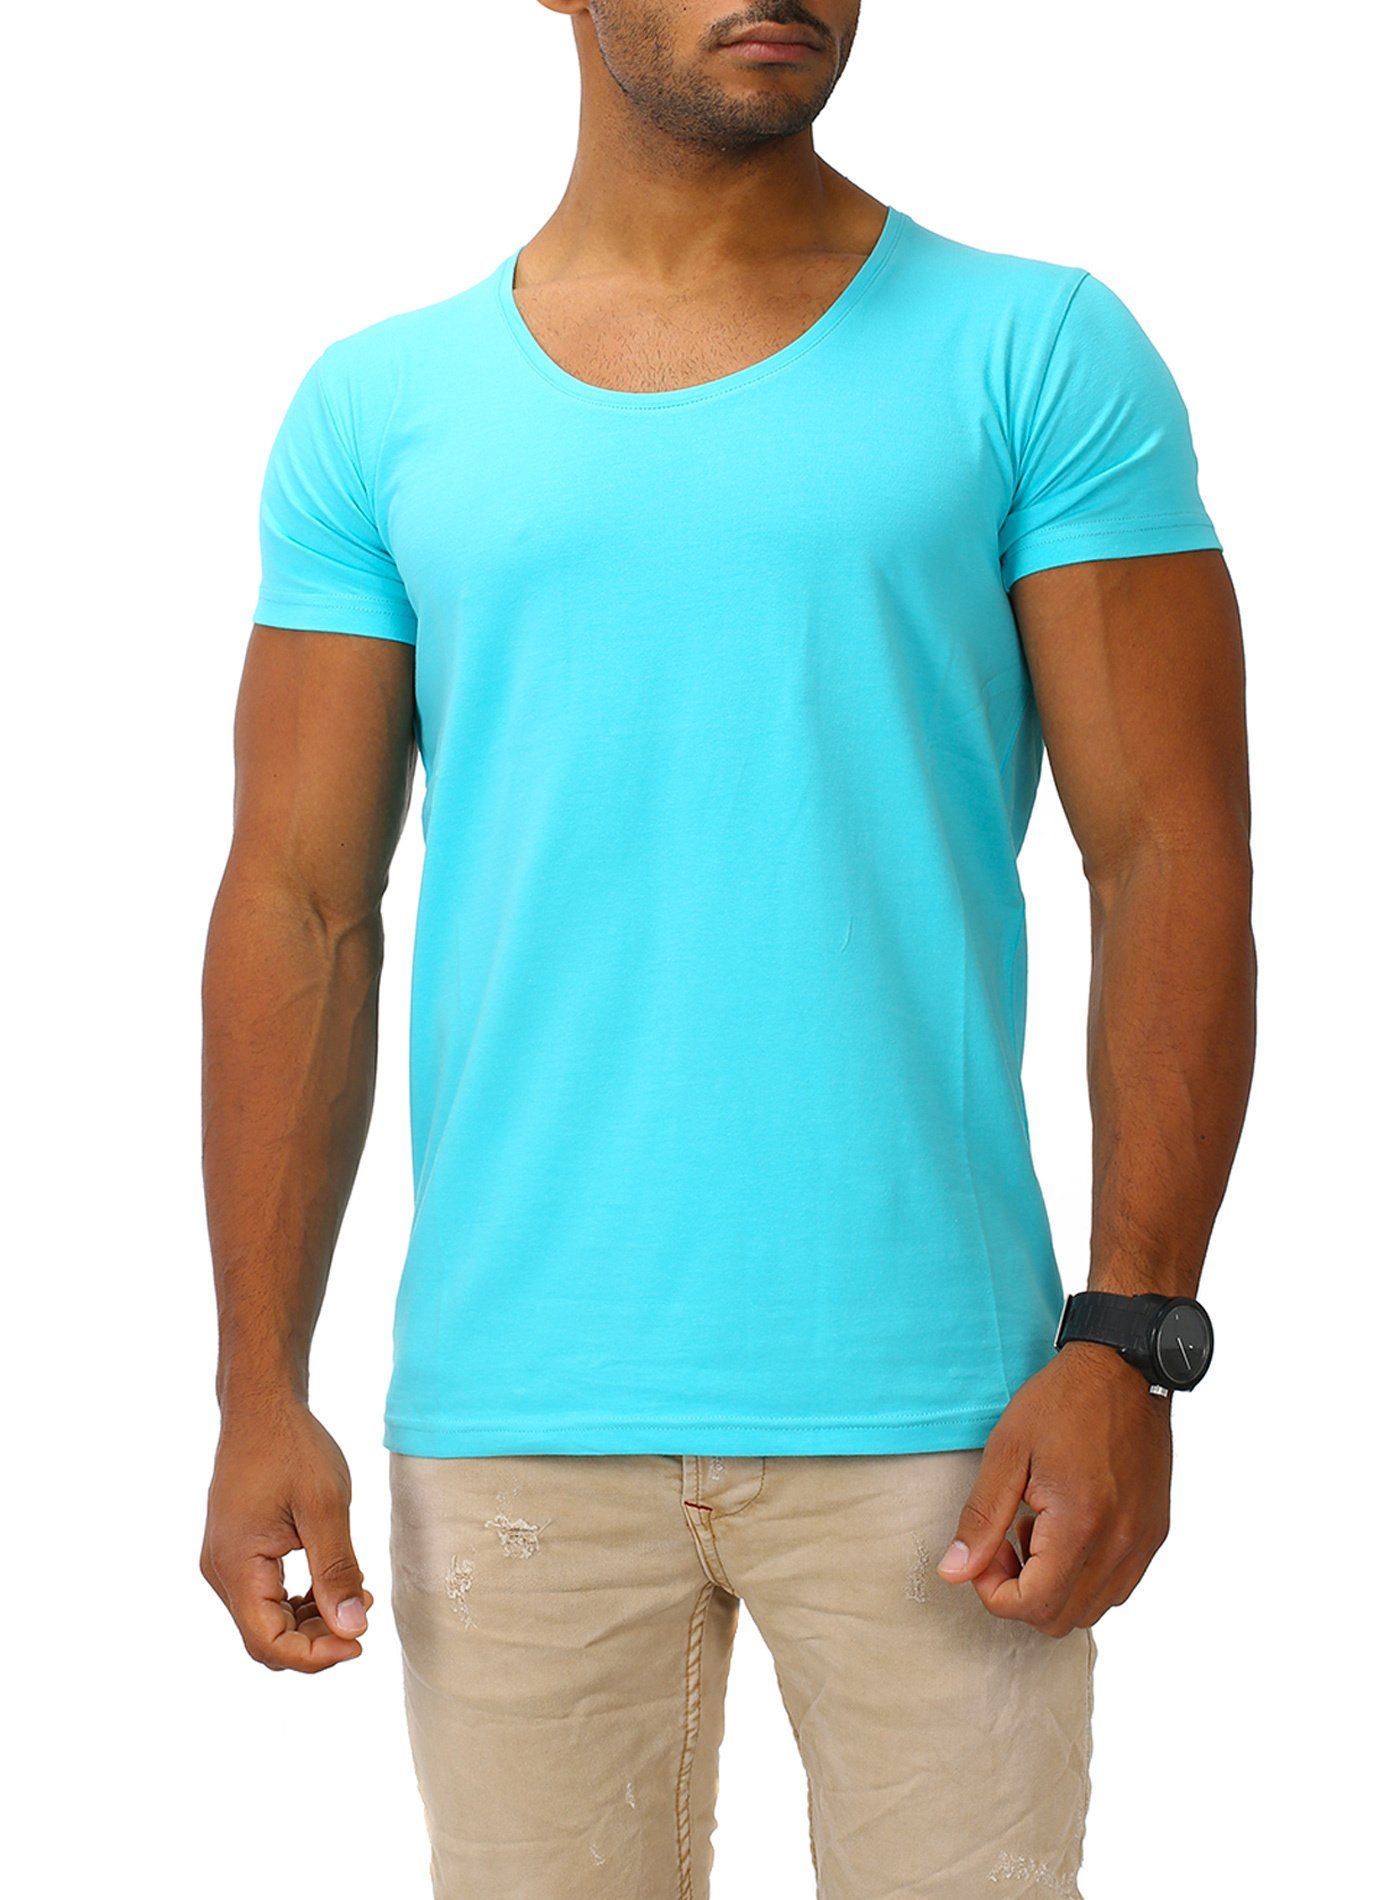 Joe Franks T-Shirt mit Rundhalsausschnitt turquoise